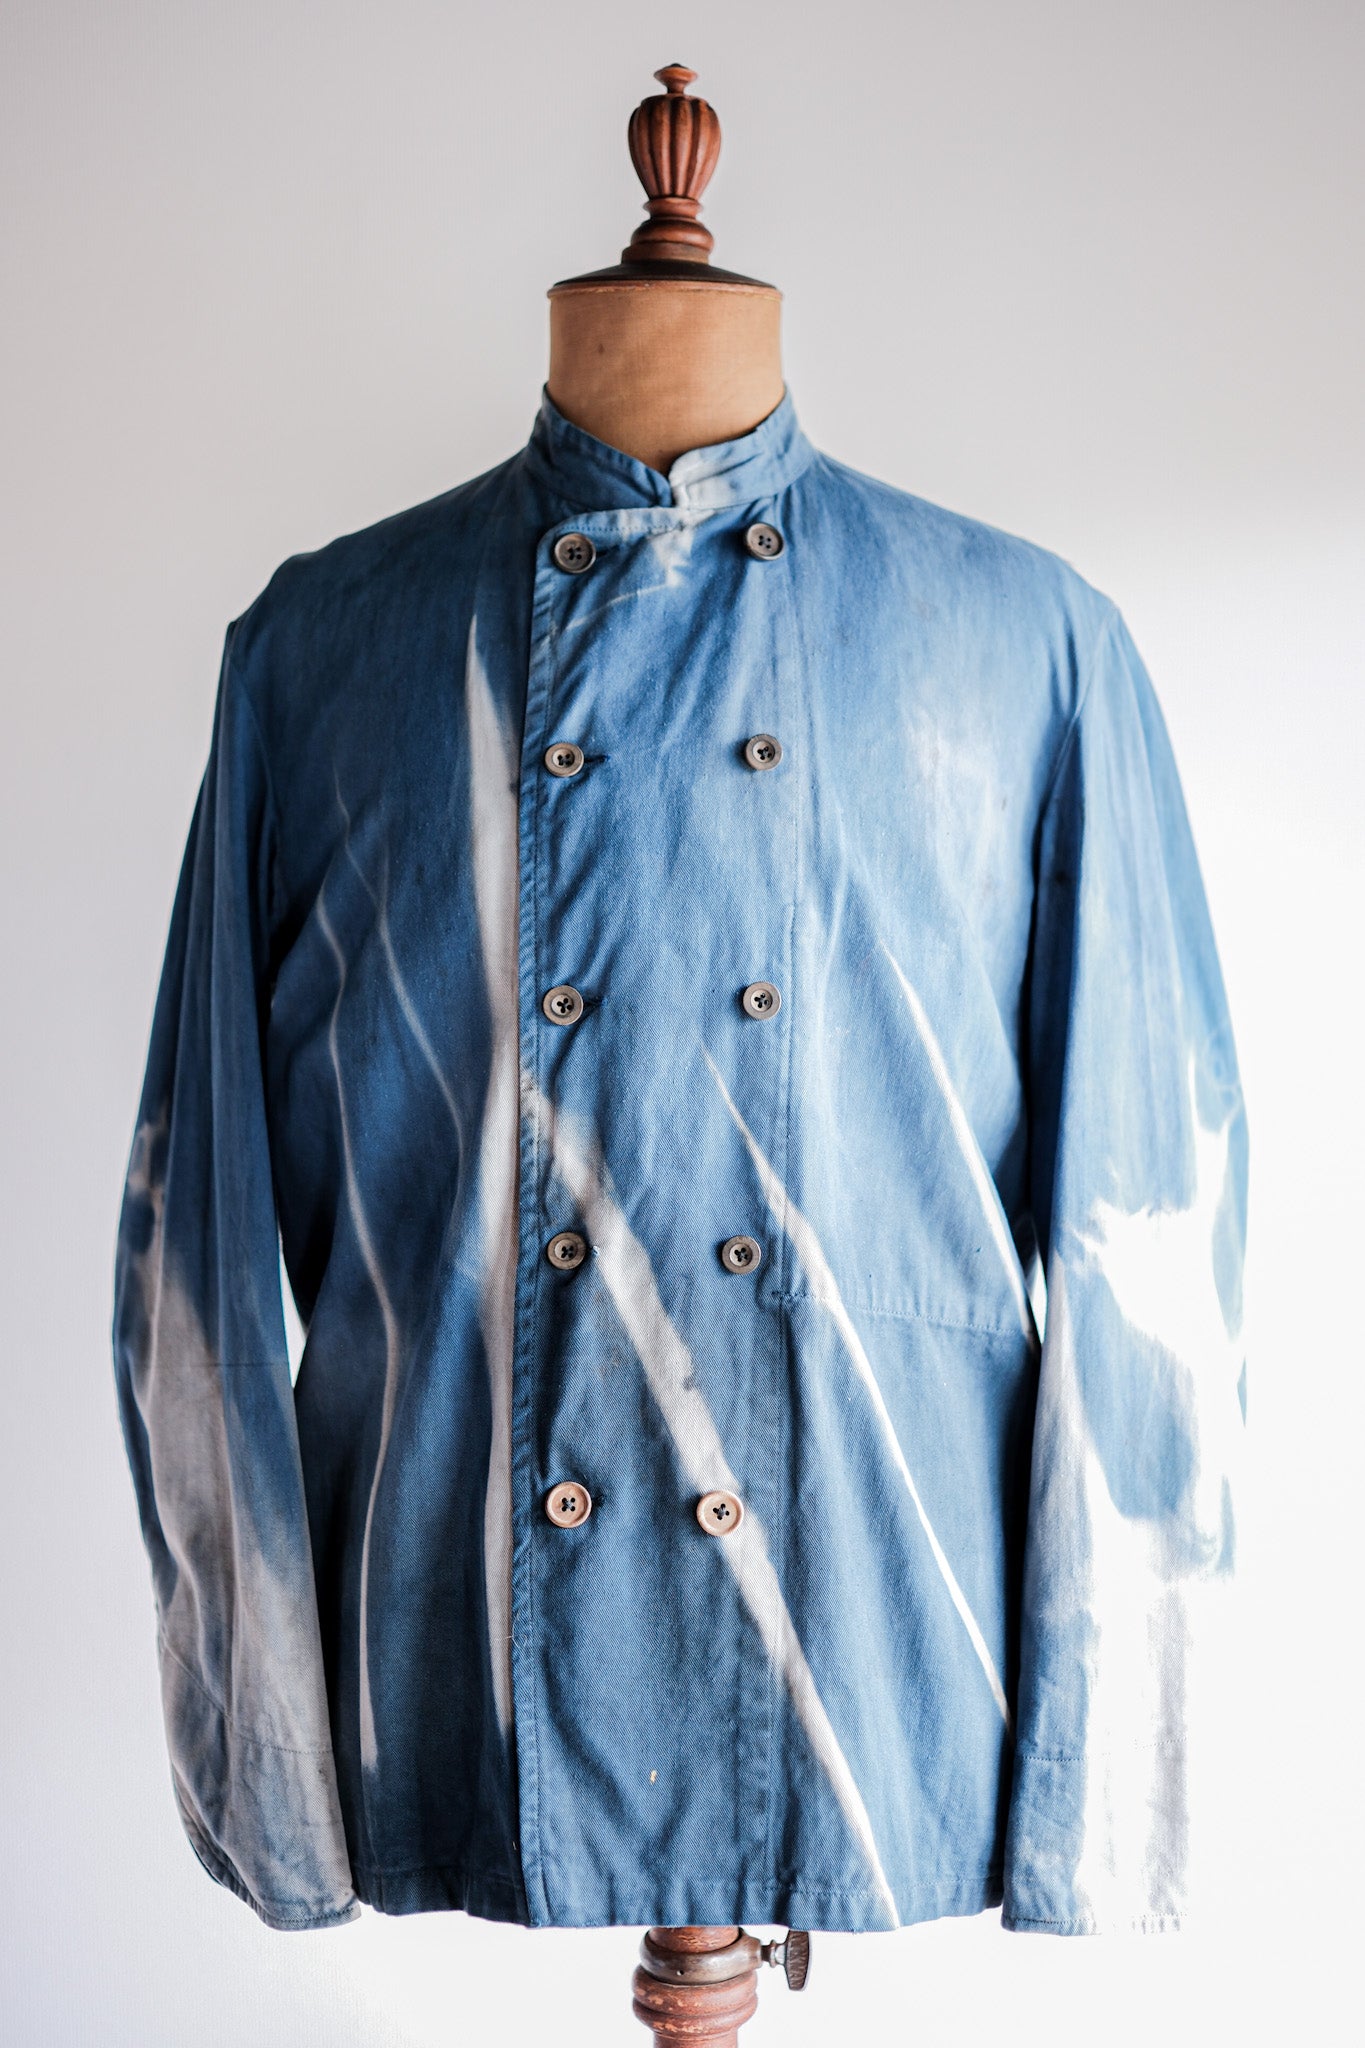 Indigo Cotton Twill Double Breasted Work Jacket "Karim Hadjab" "4season"